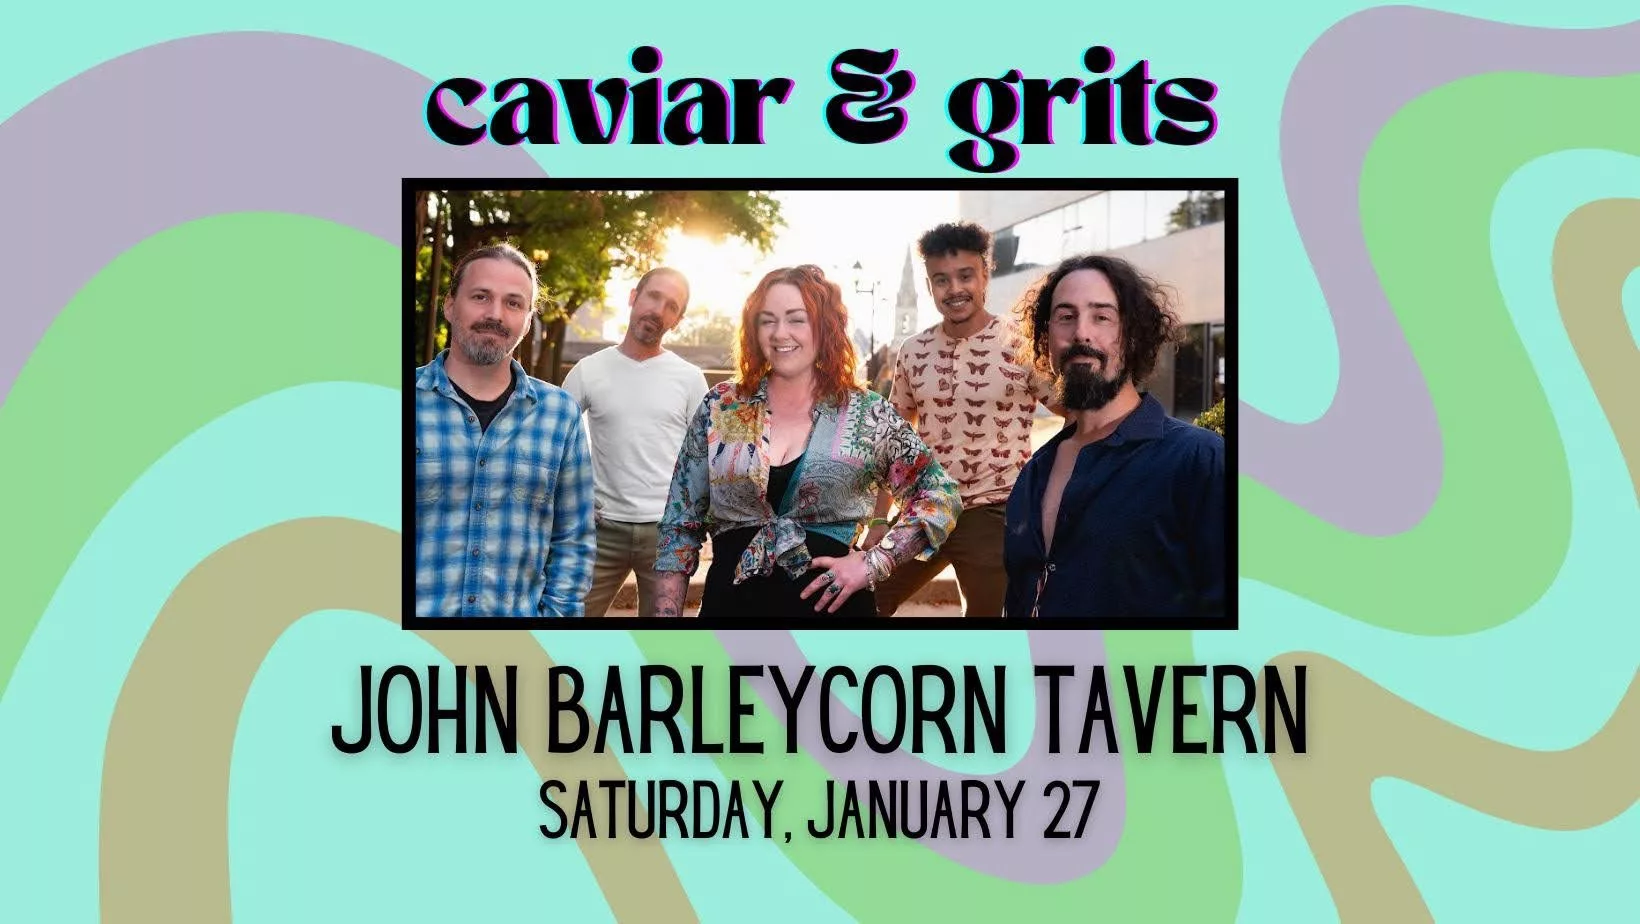 Caviar & Grits live at the John Barleycorn Tavern